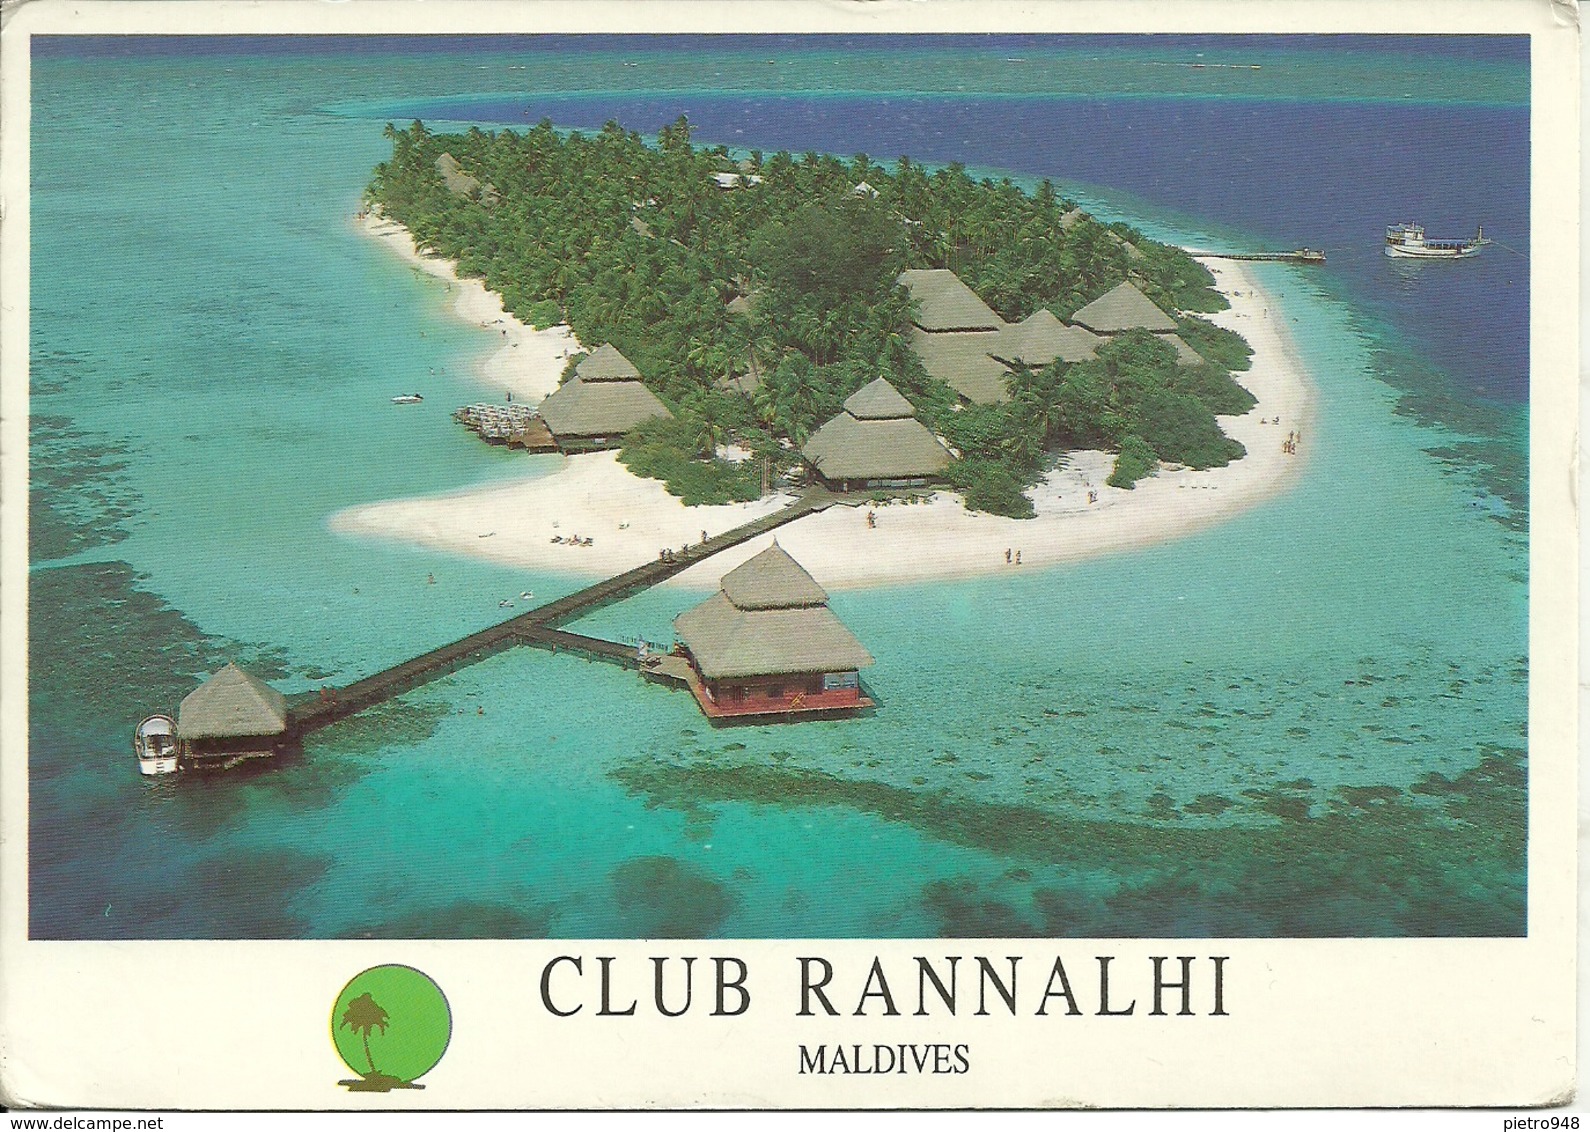 Maldives, Club Rannalhi, An Aitken Spence Hotel, Aerial View, Thematic Stamp "Basket Barcelona '92", - Maldive